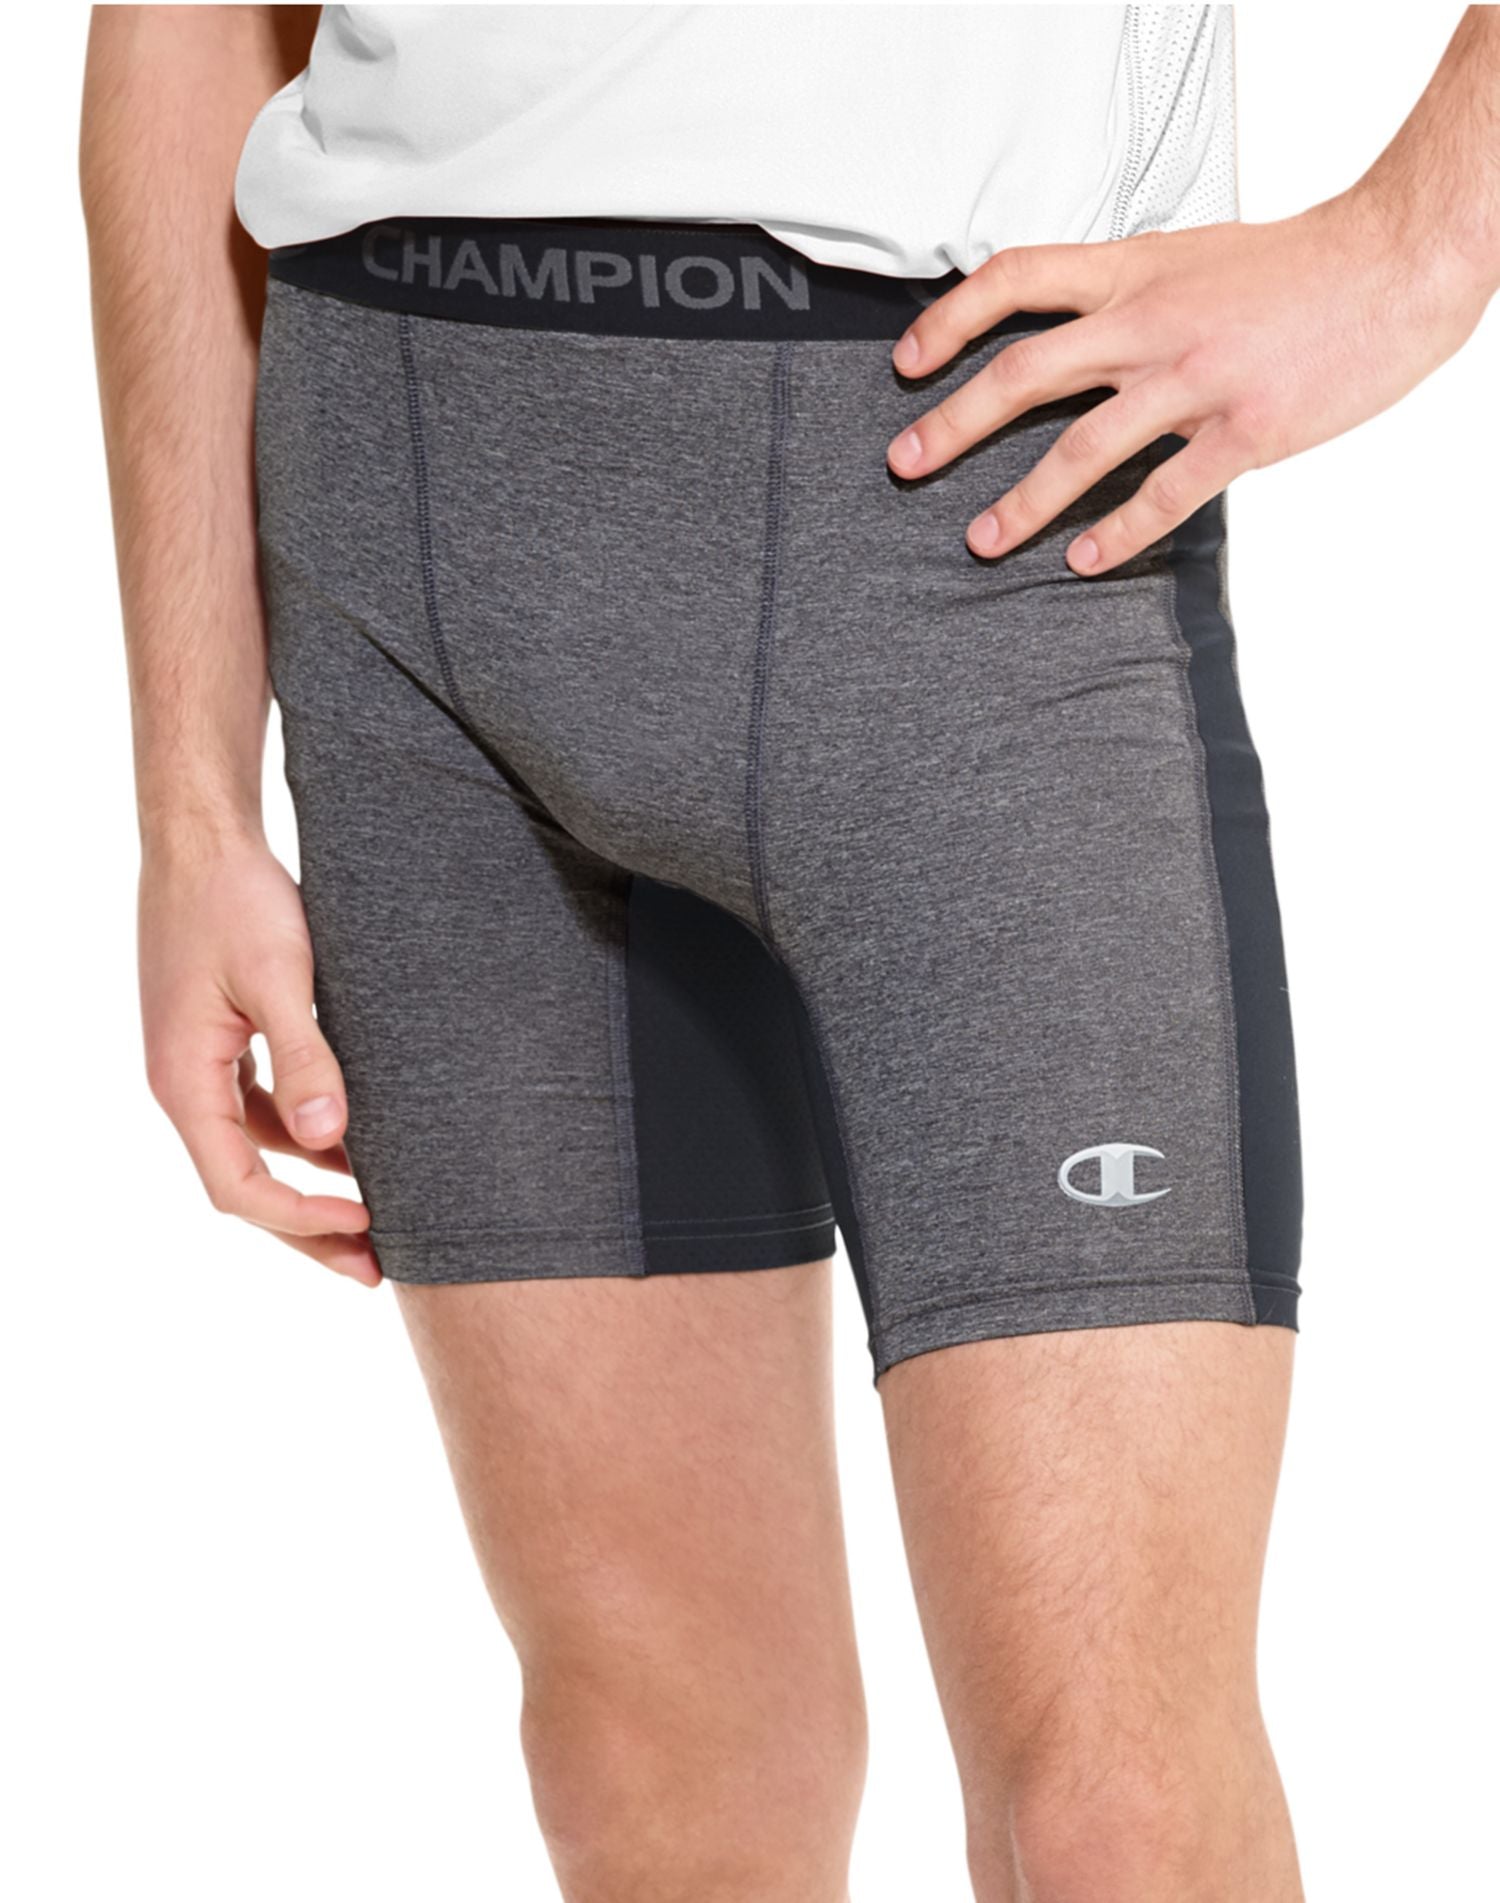 Champion Mens Power Flex 9-inch Compression Shorts, S, Stealth/Stormy Night